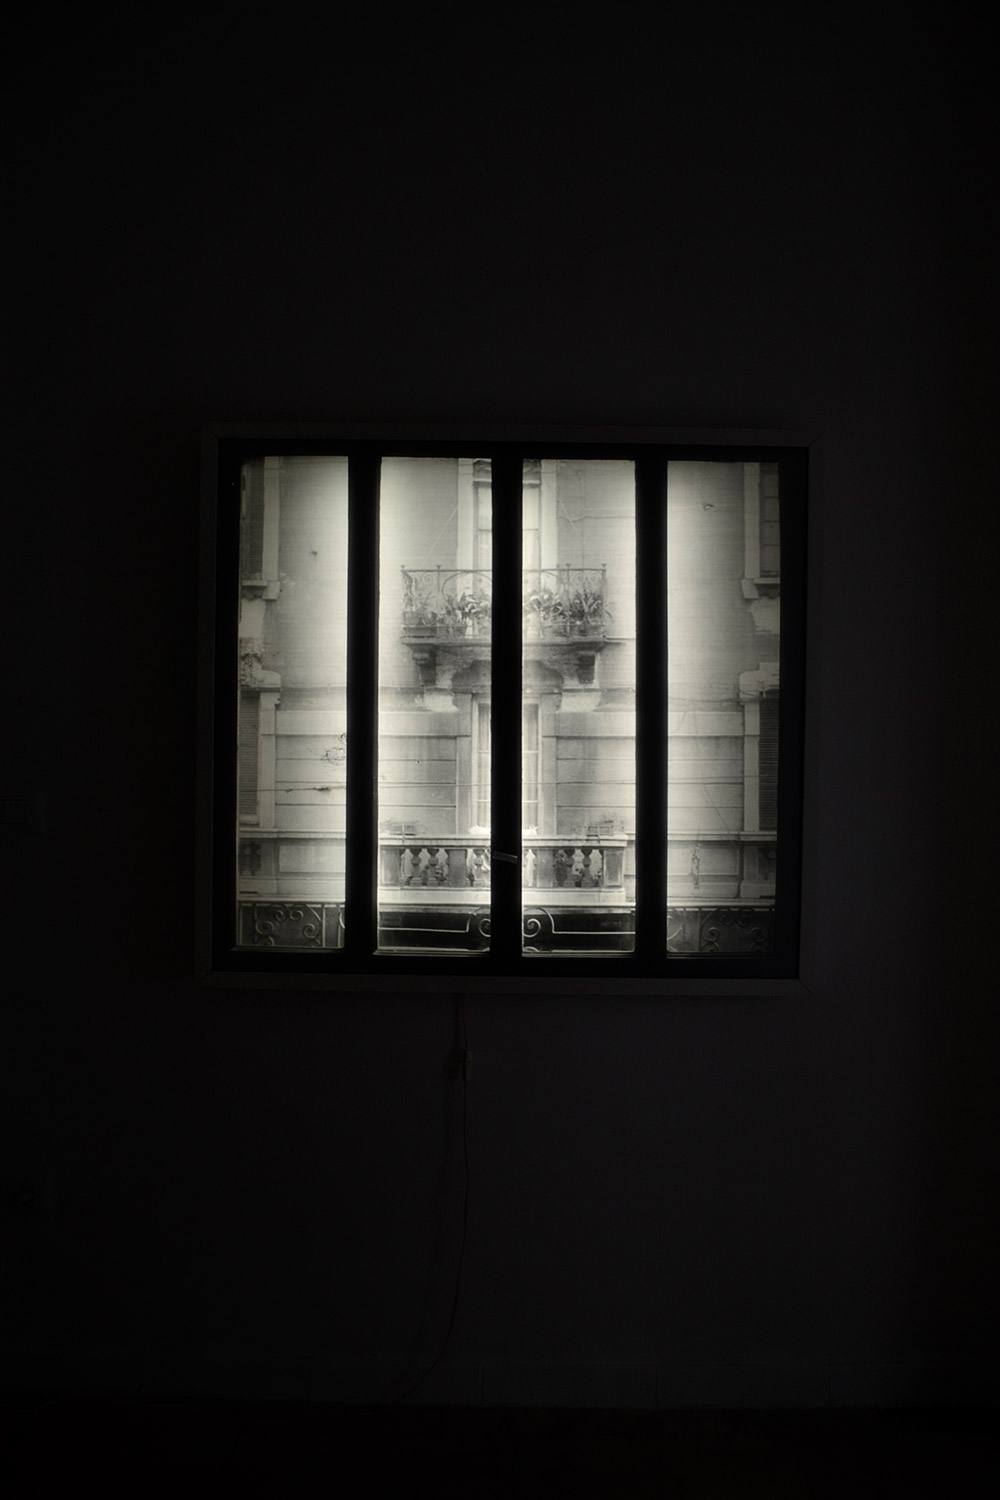 Antonio Trotta, Finestra su vetro, 1972, light box, emulsion on glass, 120x120x12 cm (ON)